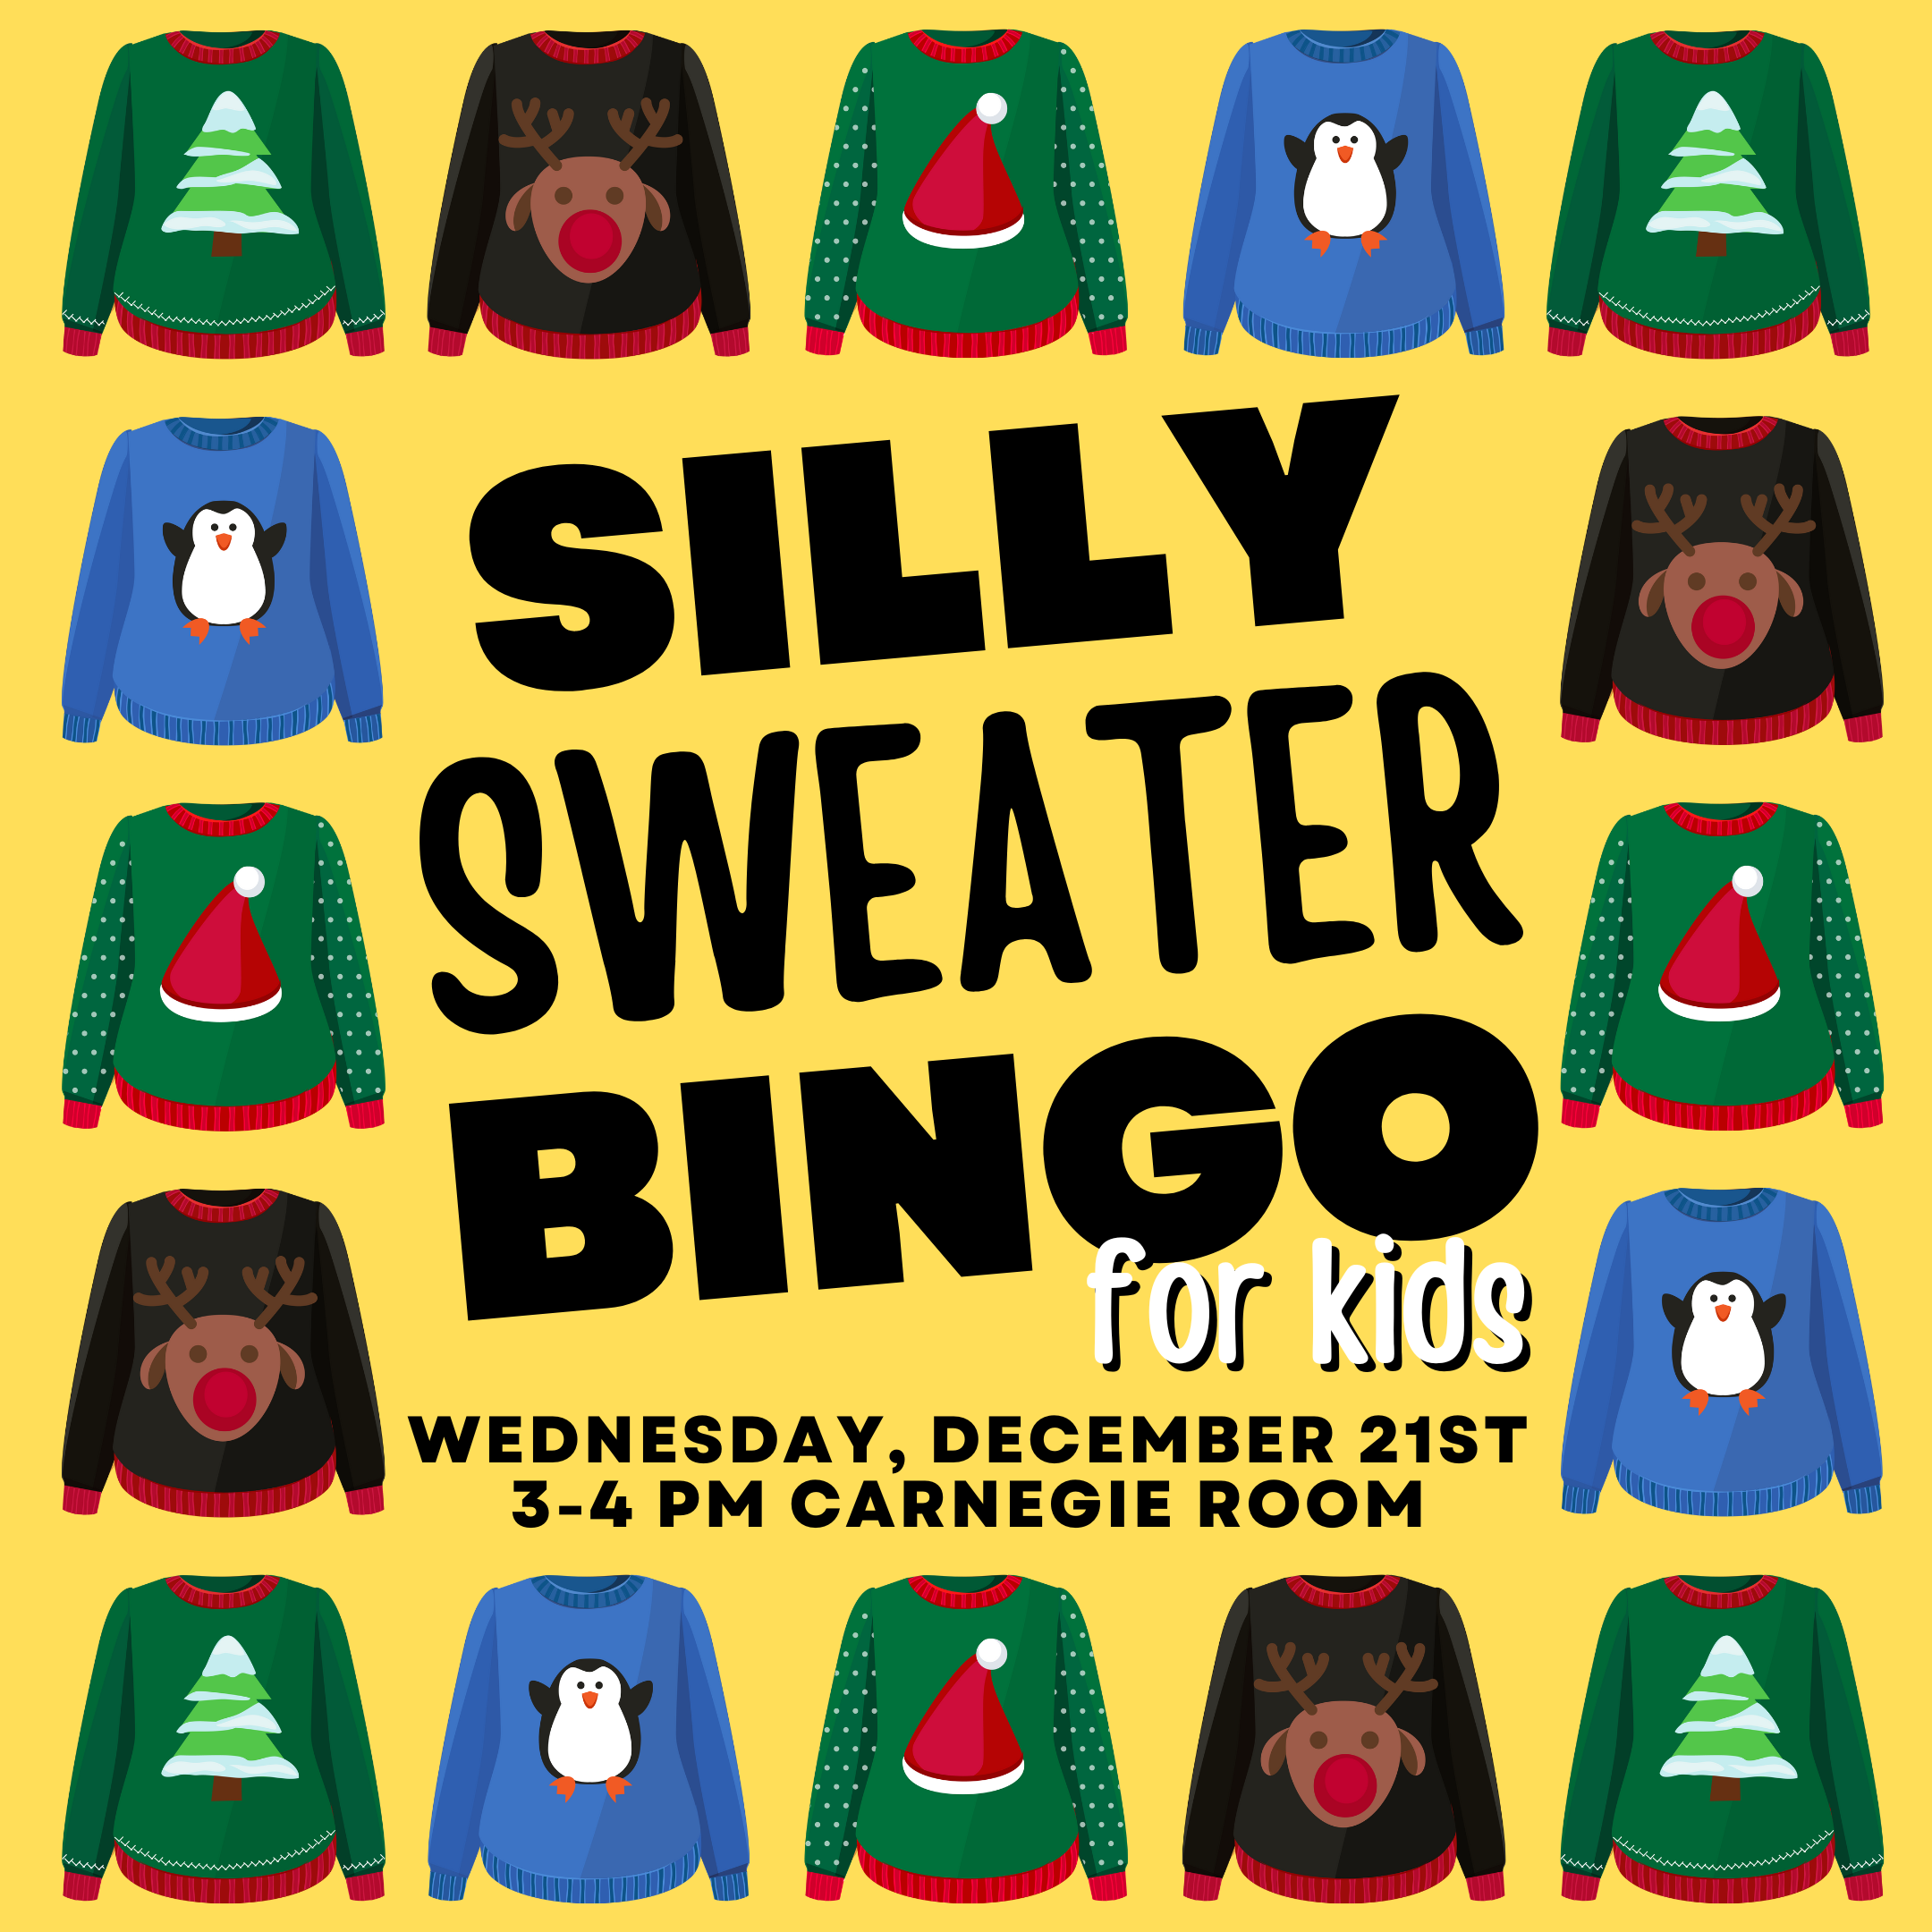 Silly Sweater Bingo for Kids Wednesday December 21 3-4 PM Carnegie Room